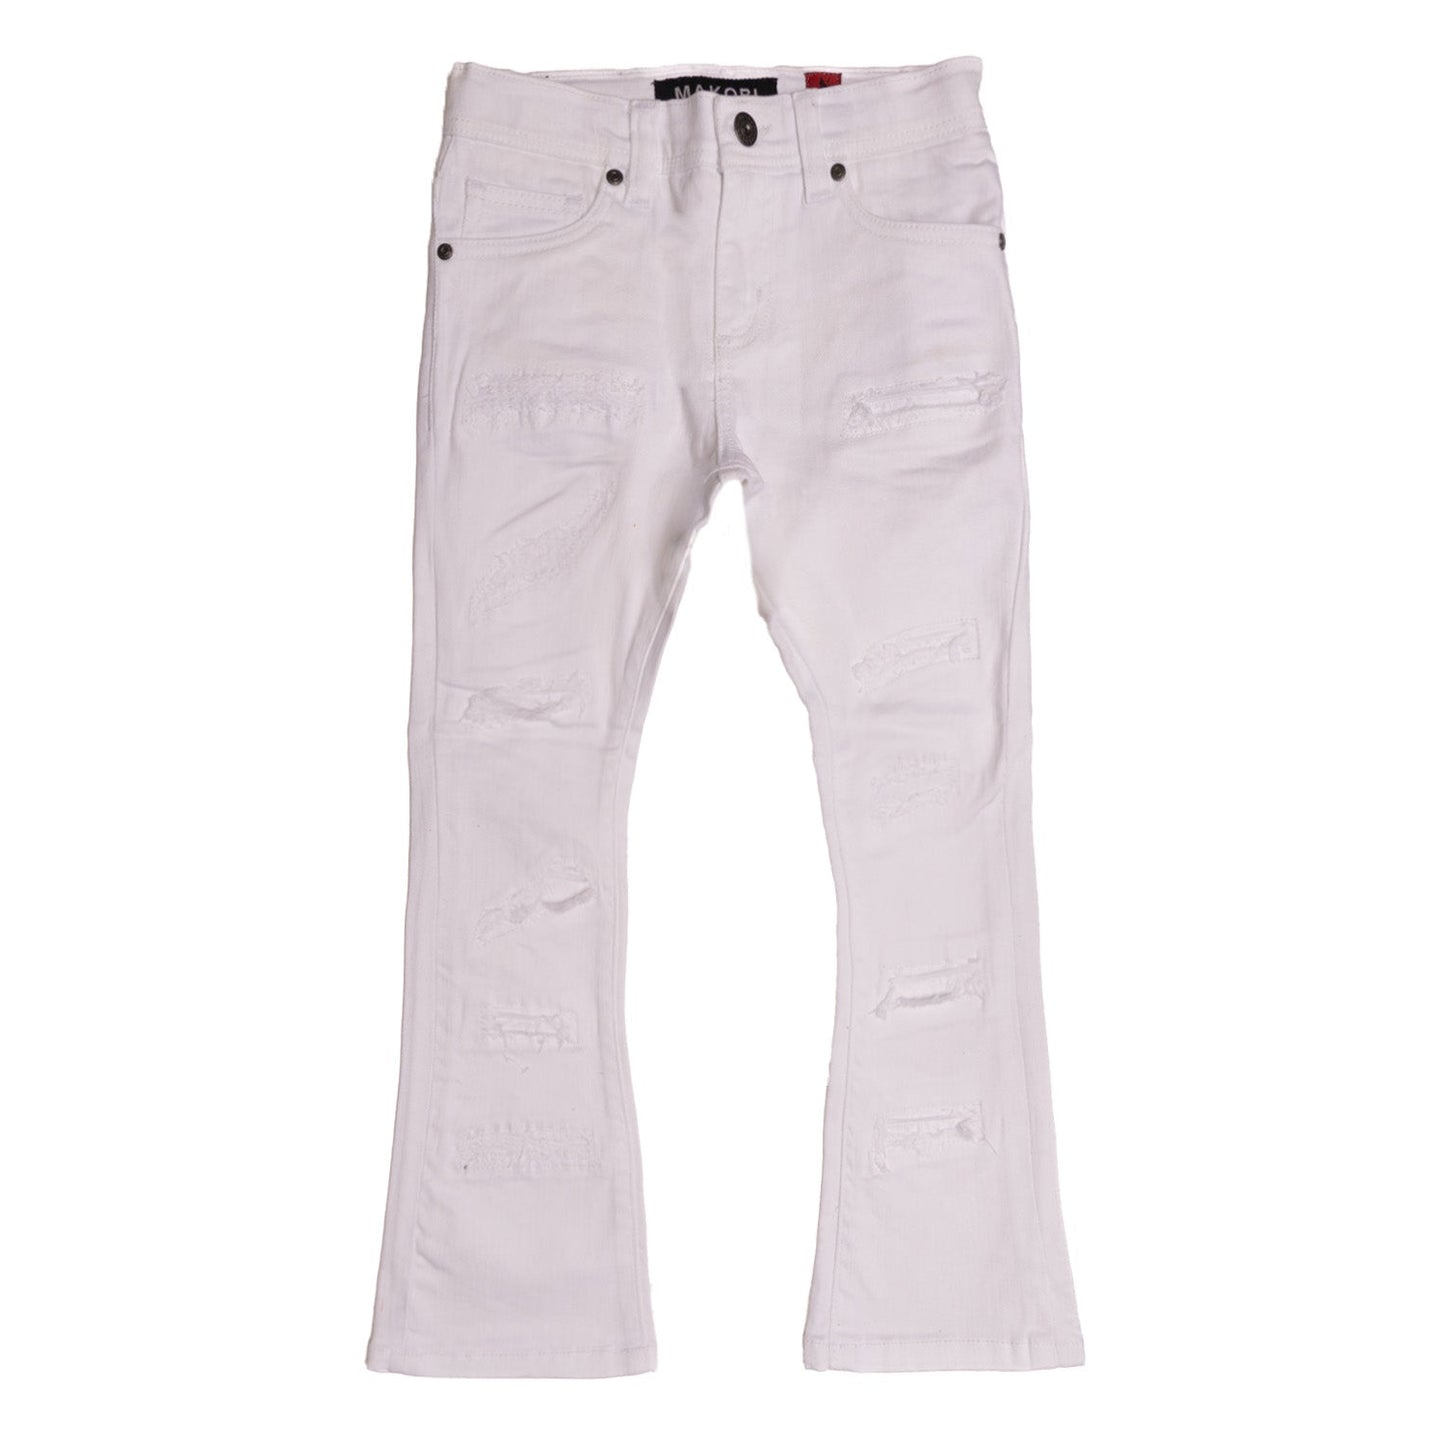 B1903 Makobi Montego Kids Jeans with Underlay - White